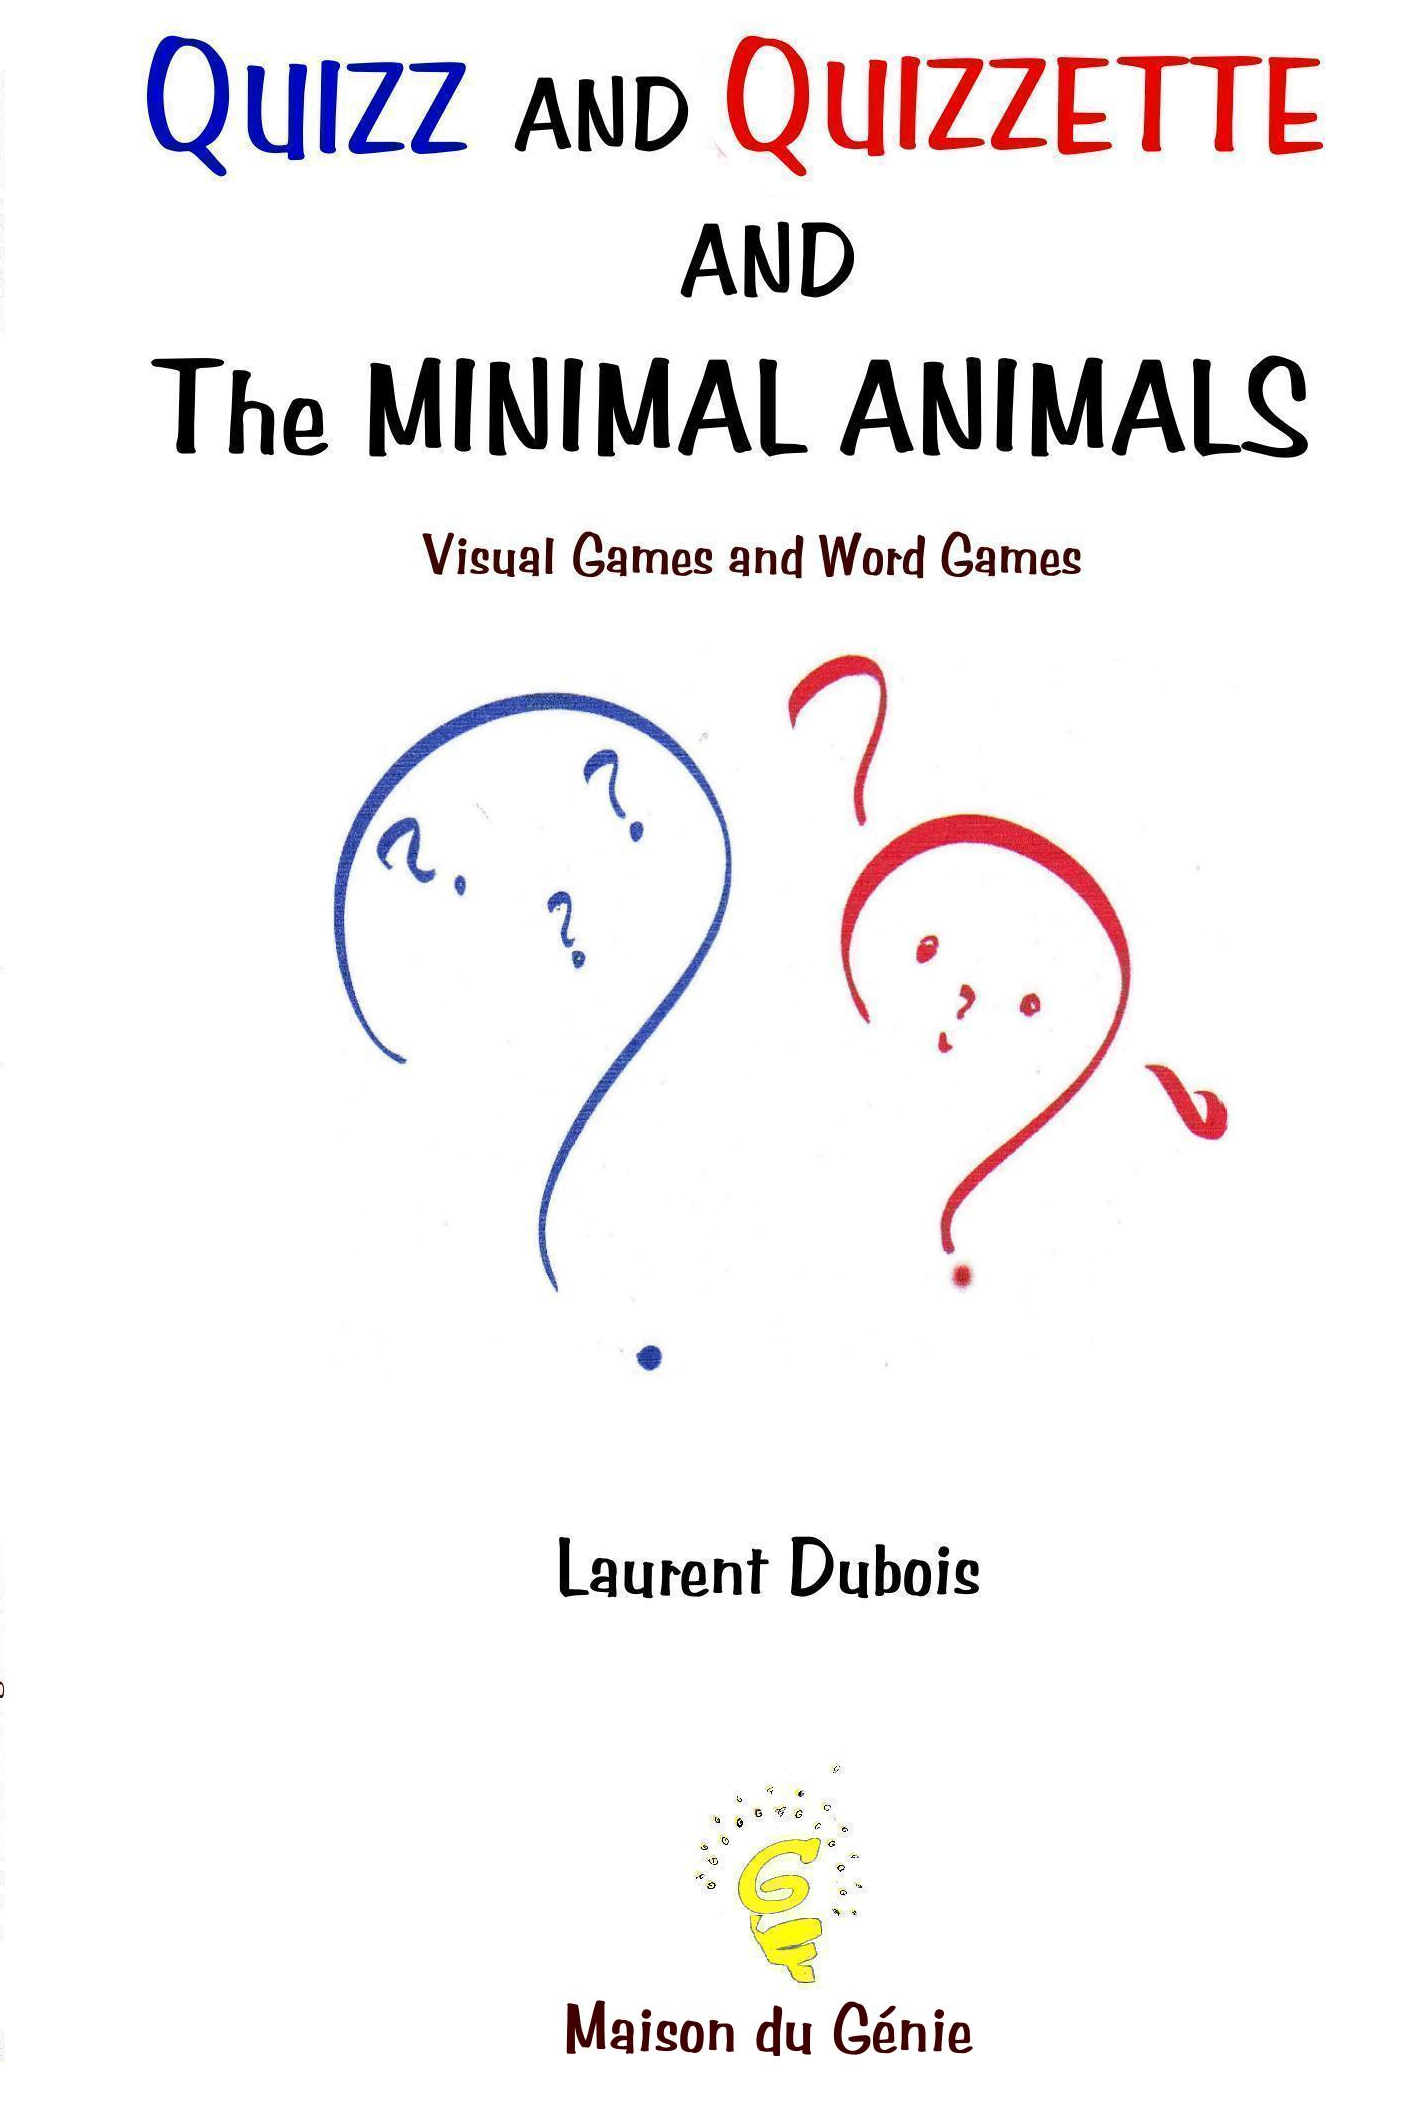 QUIZZ and QUIZZETTE : MINIMAL ANIMALS